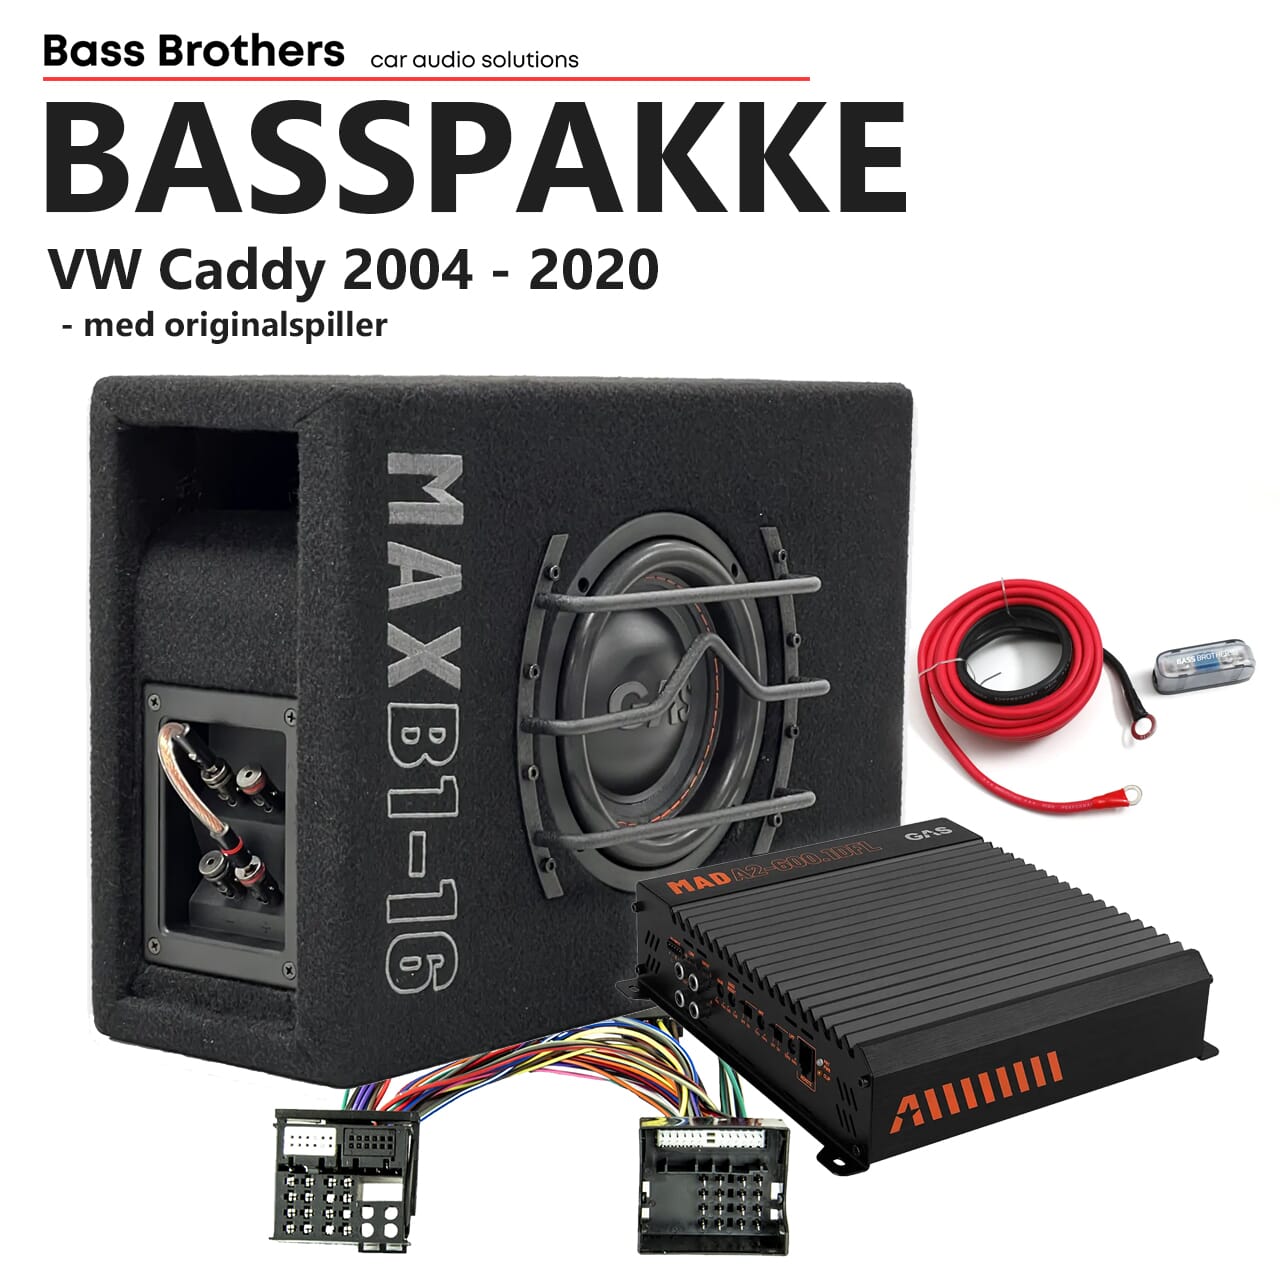 GAS basspakke for VW Caddy